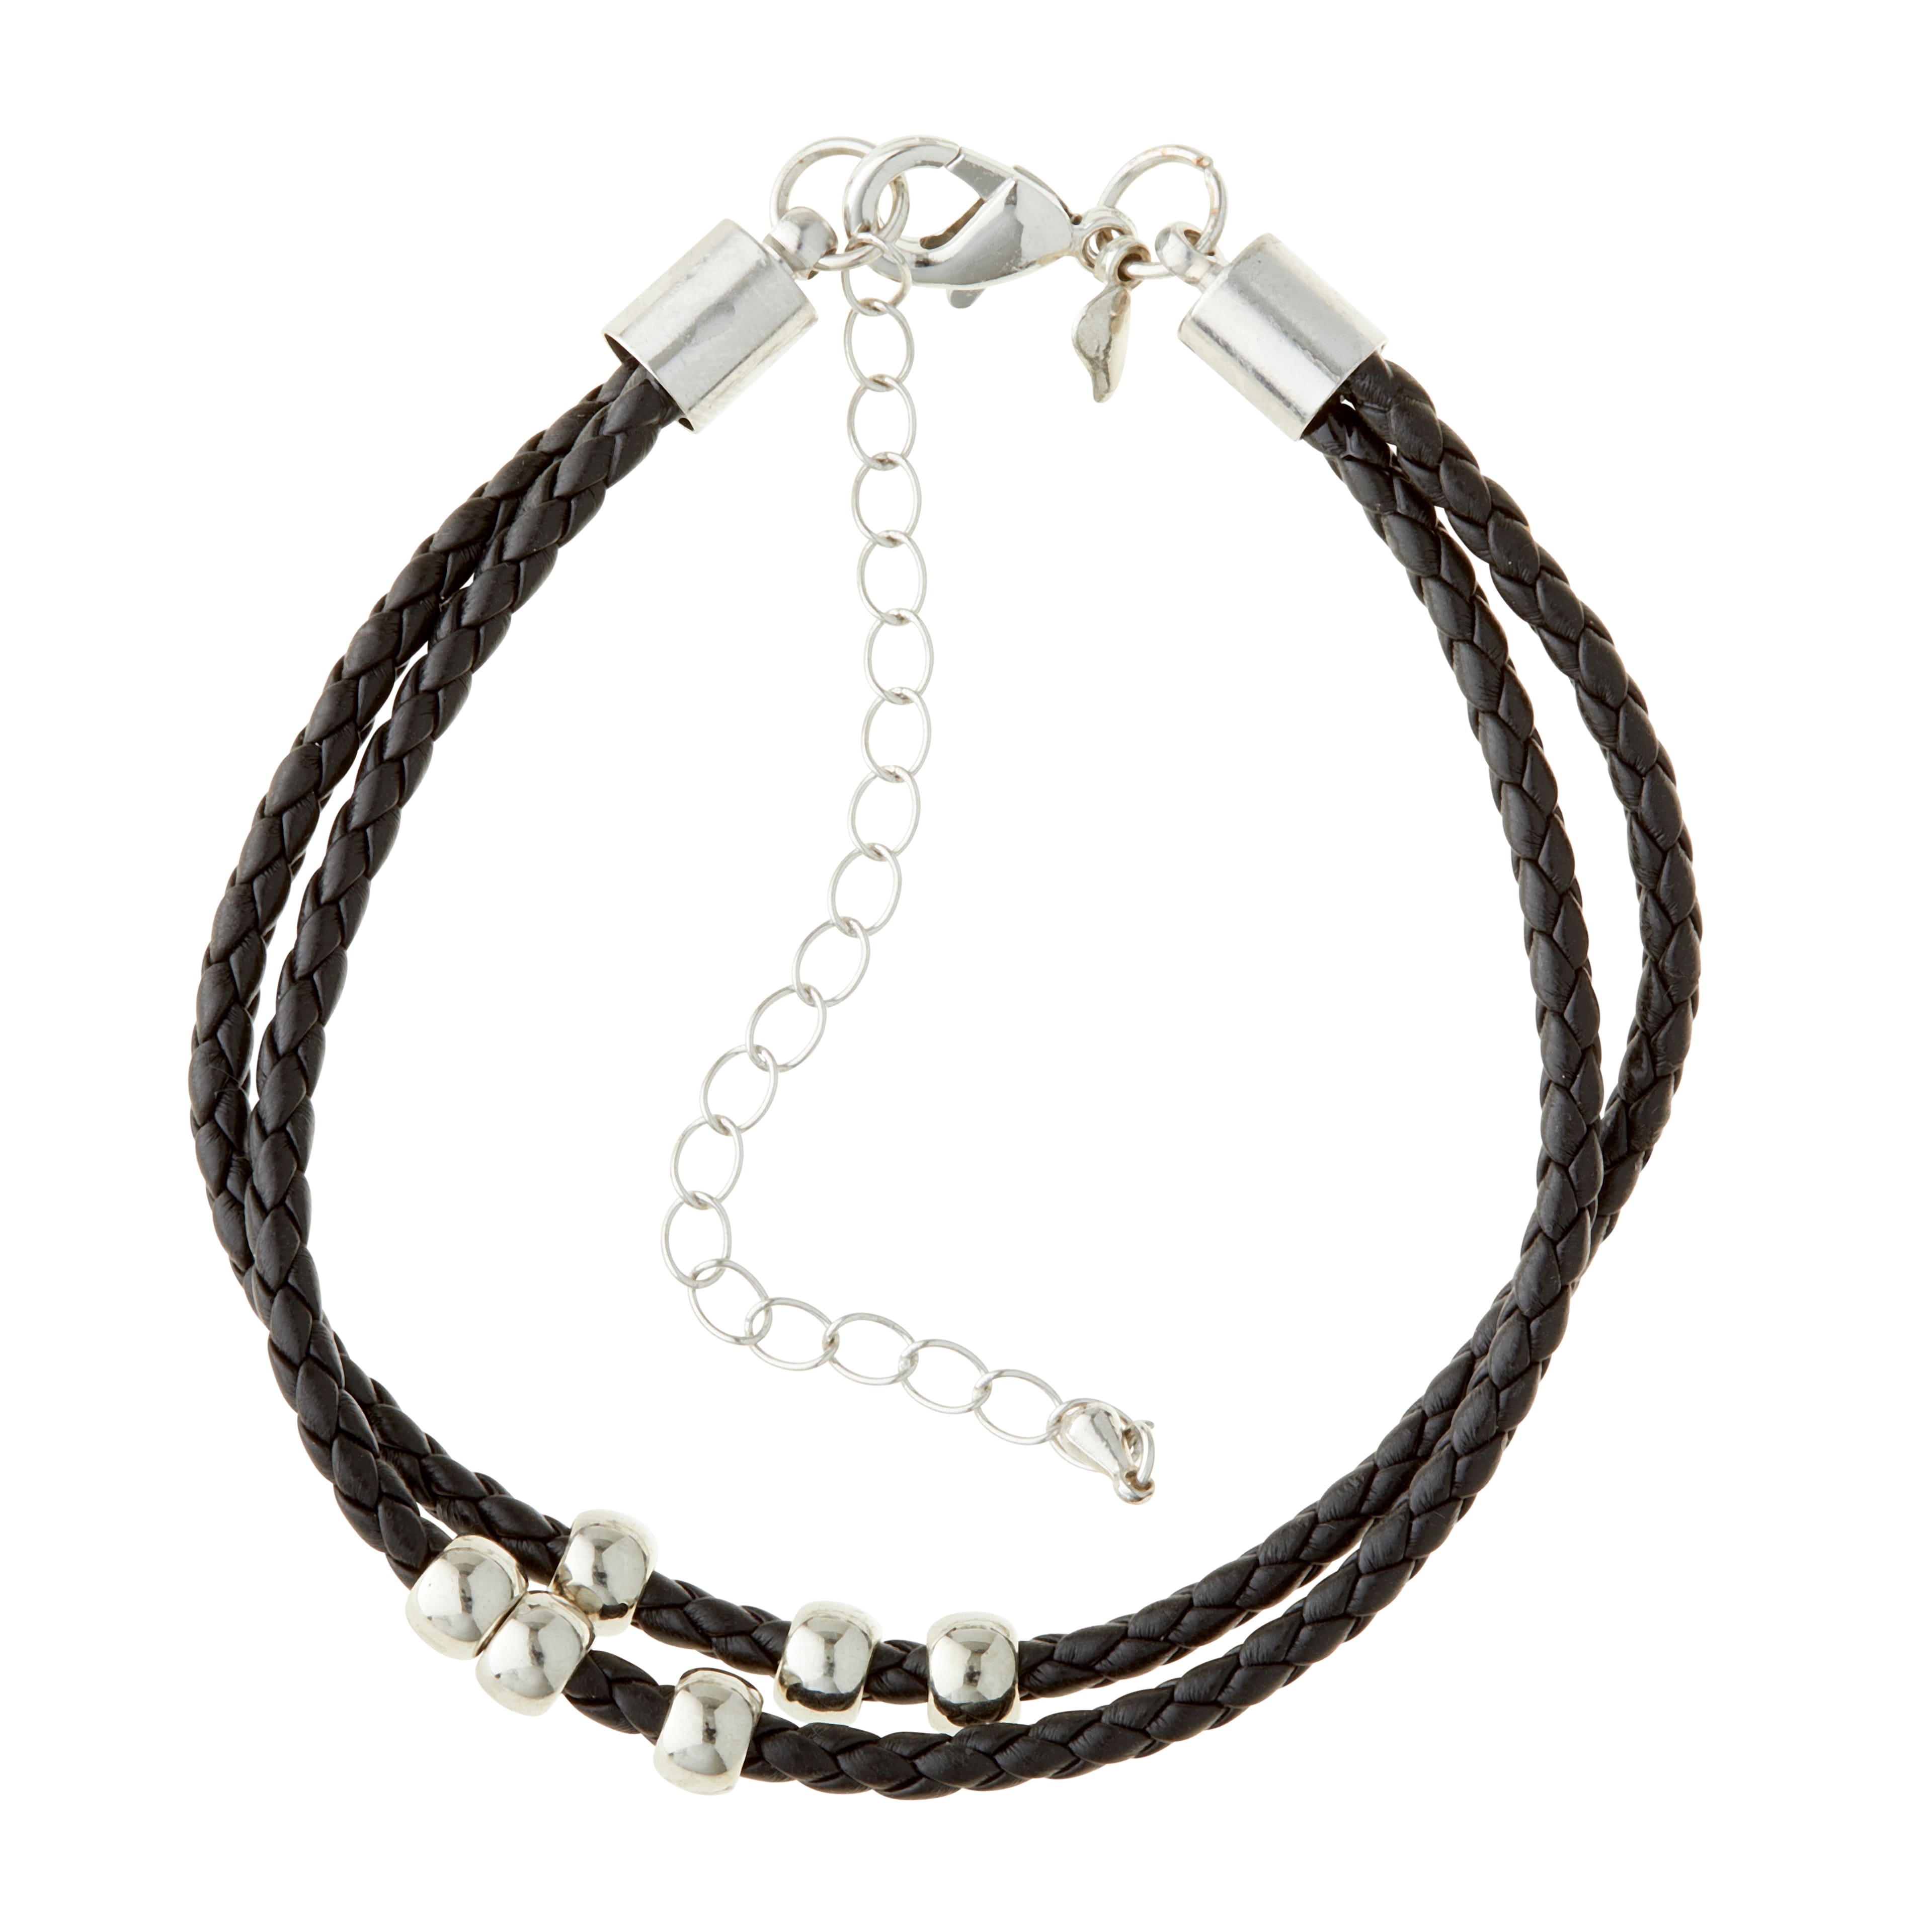 Bead Landing Charmalong Black Faux Leather Bracelet - each